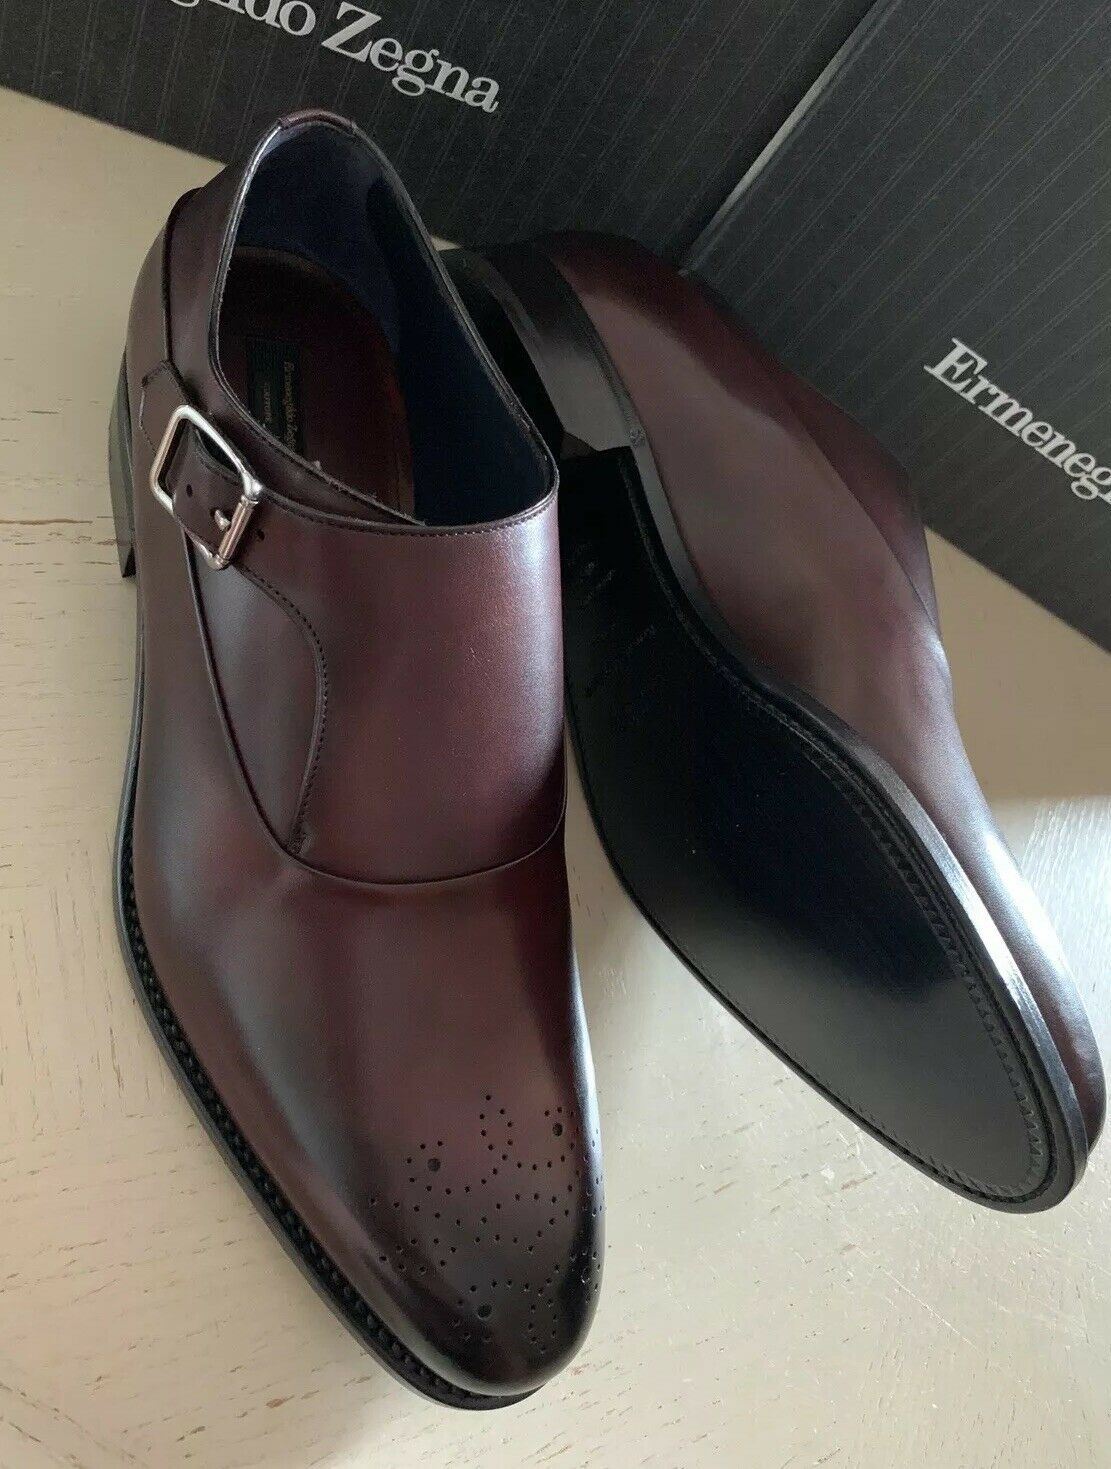 New $1350 Ermenegildo Zegna Couture Monk Brogues Leather Shoes Burgundy 11 US